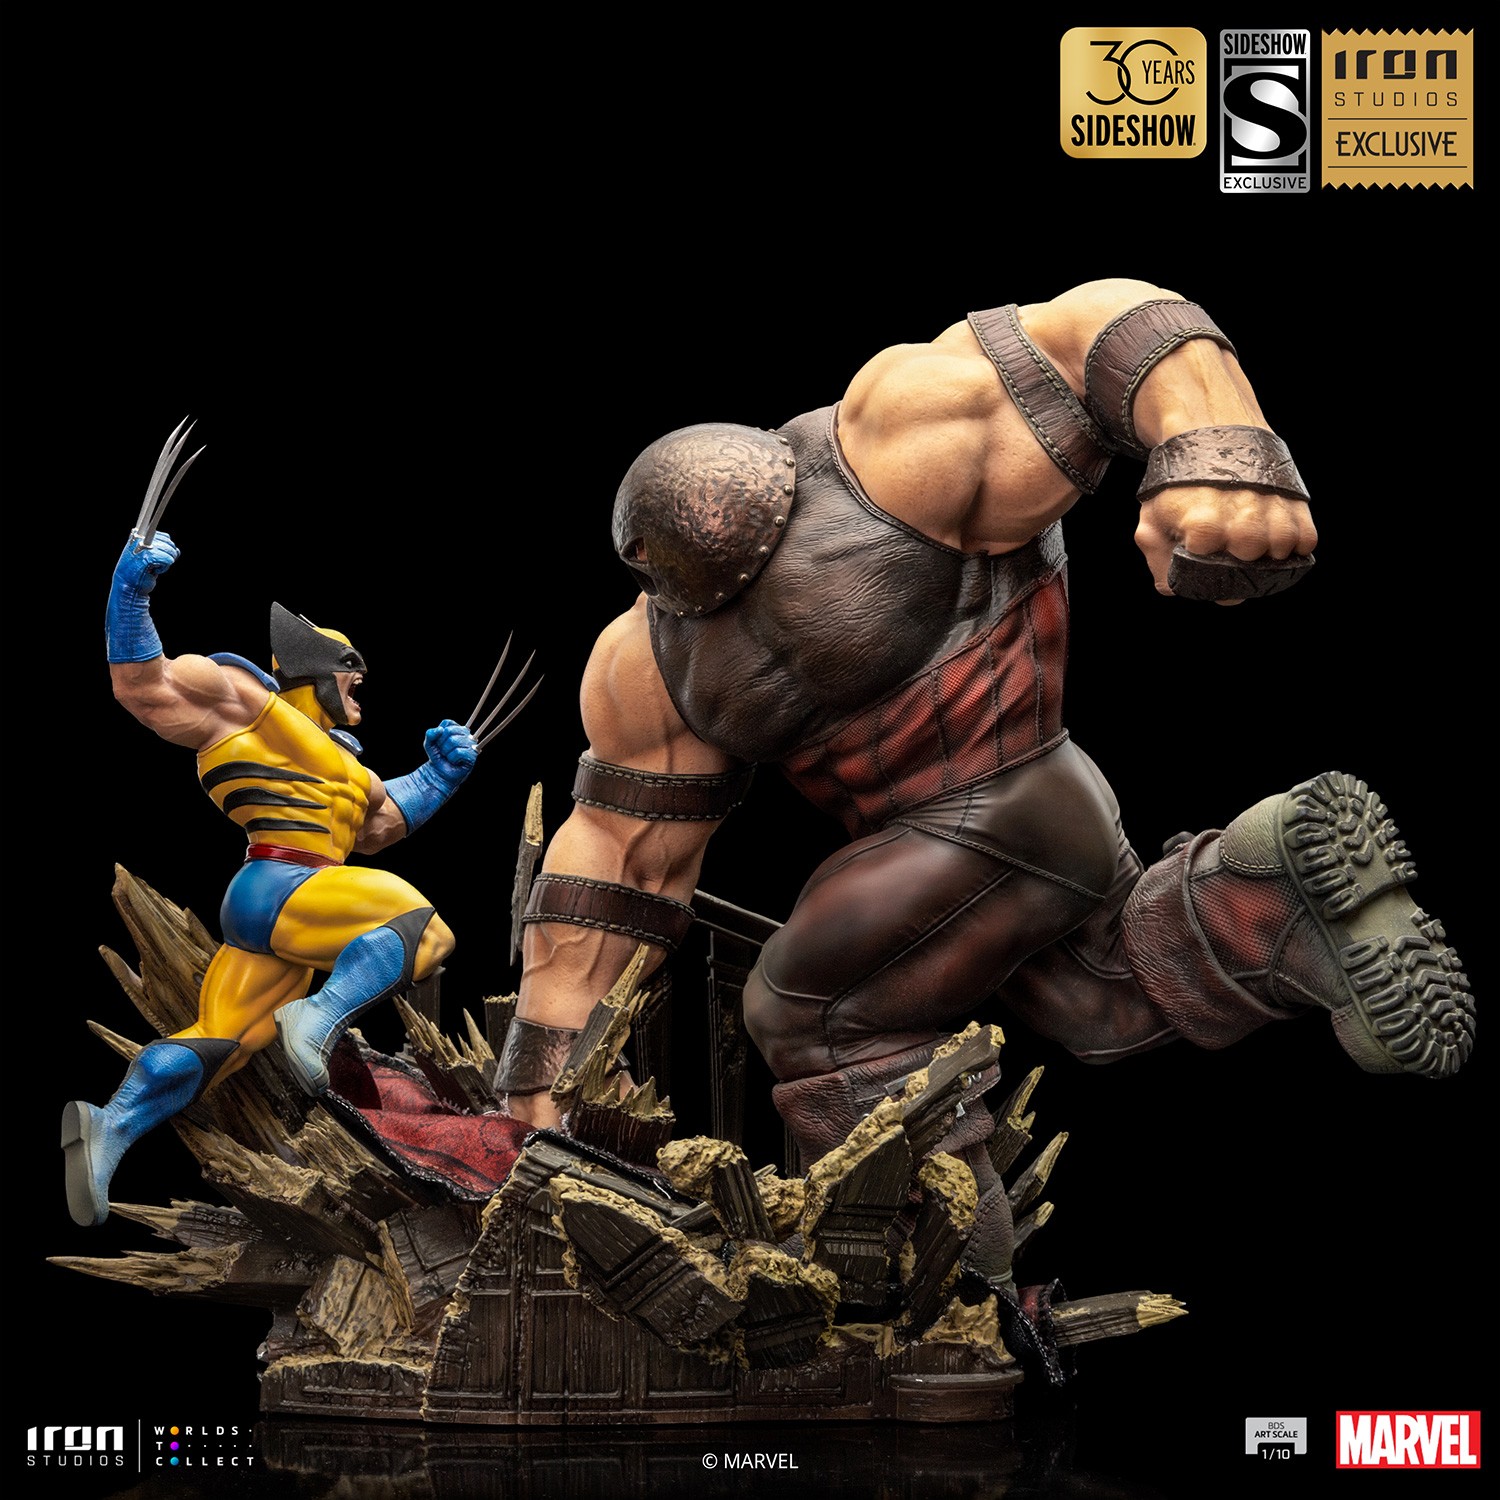 Wolverine vs Juggernaut Exclusive Edition (Prototype Shown) View 1